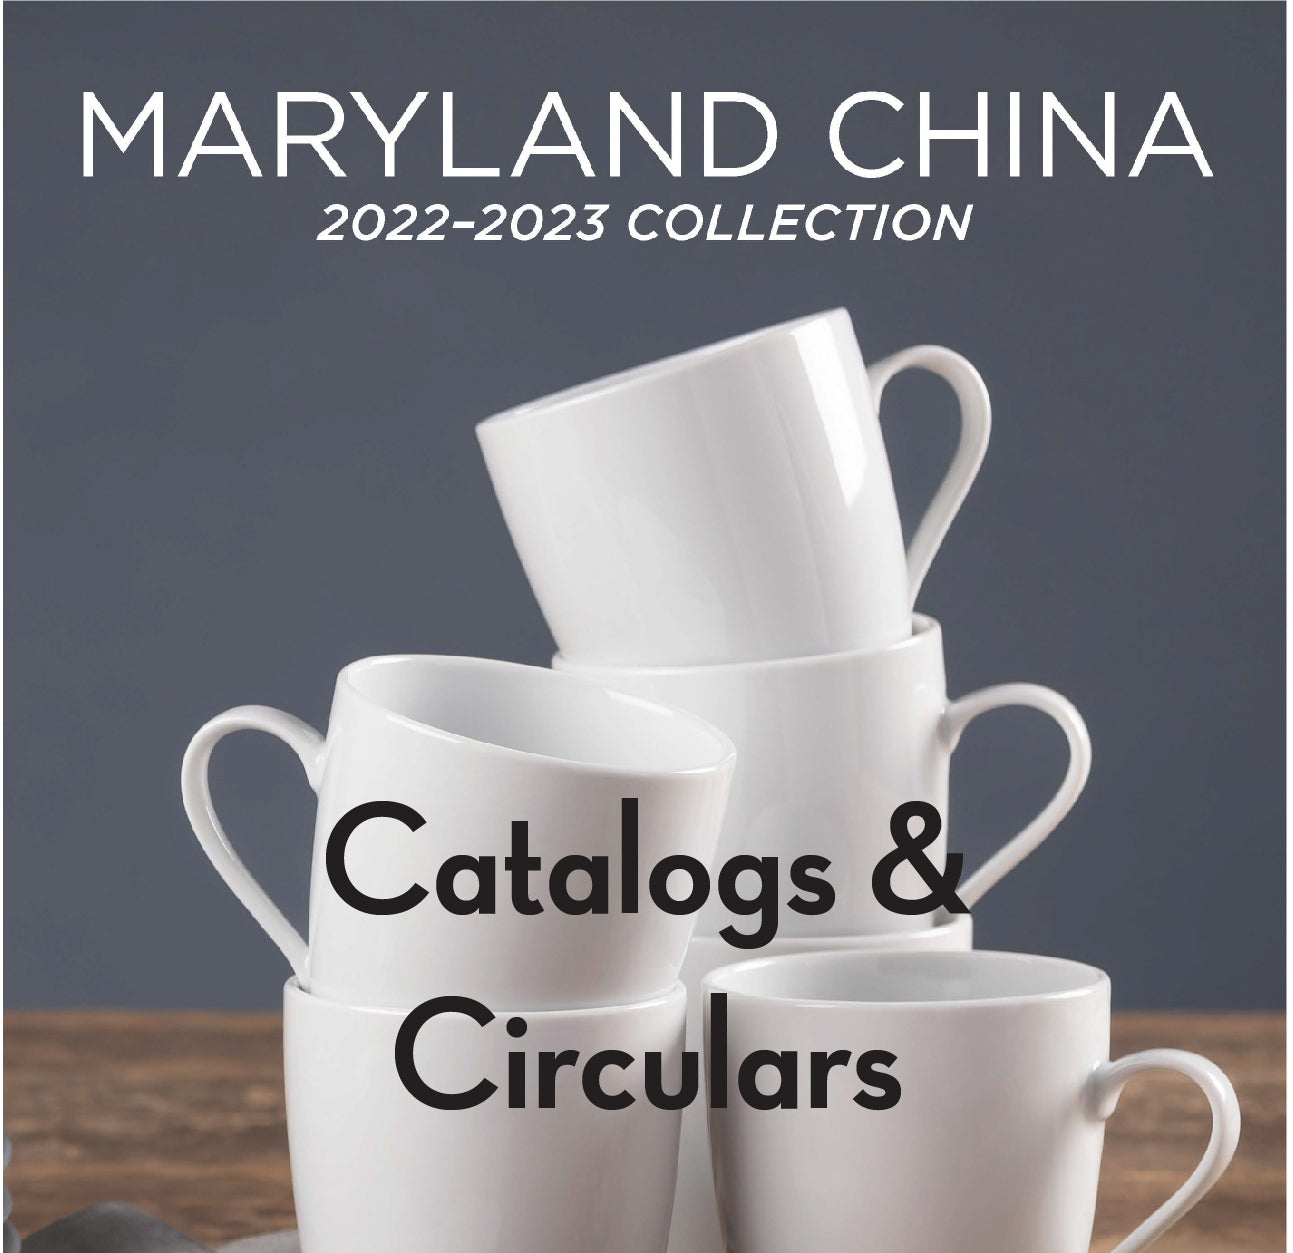 Catalogs and circulars